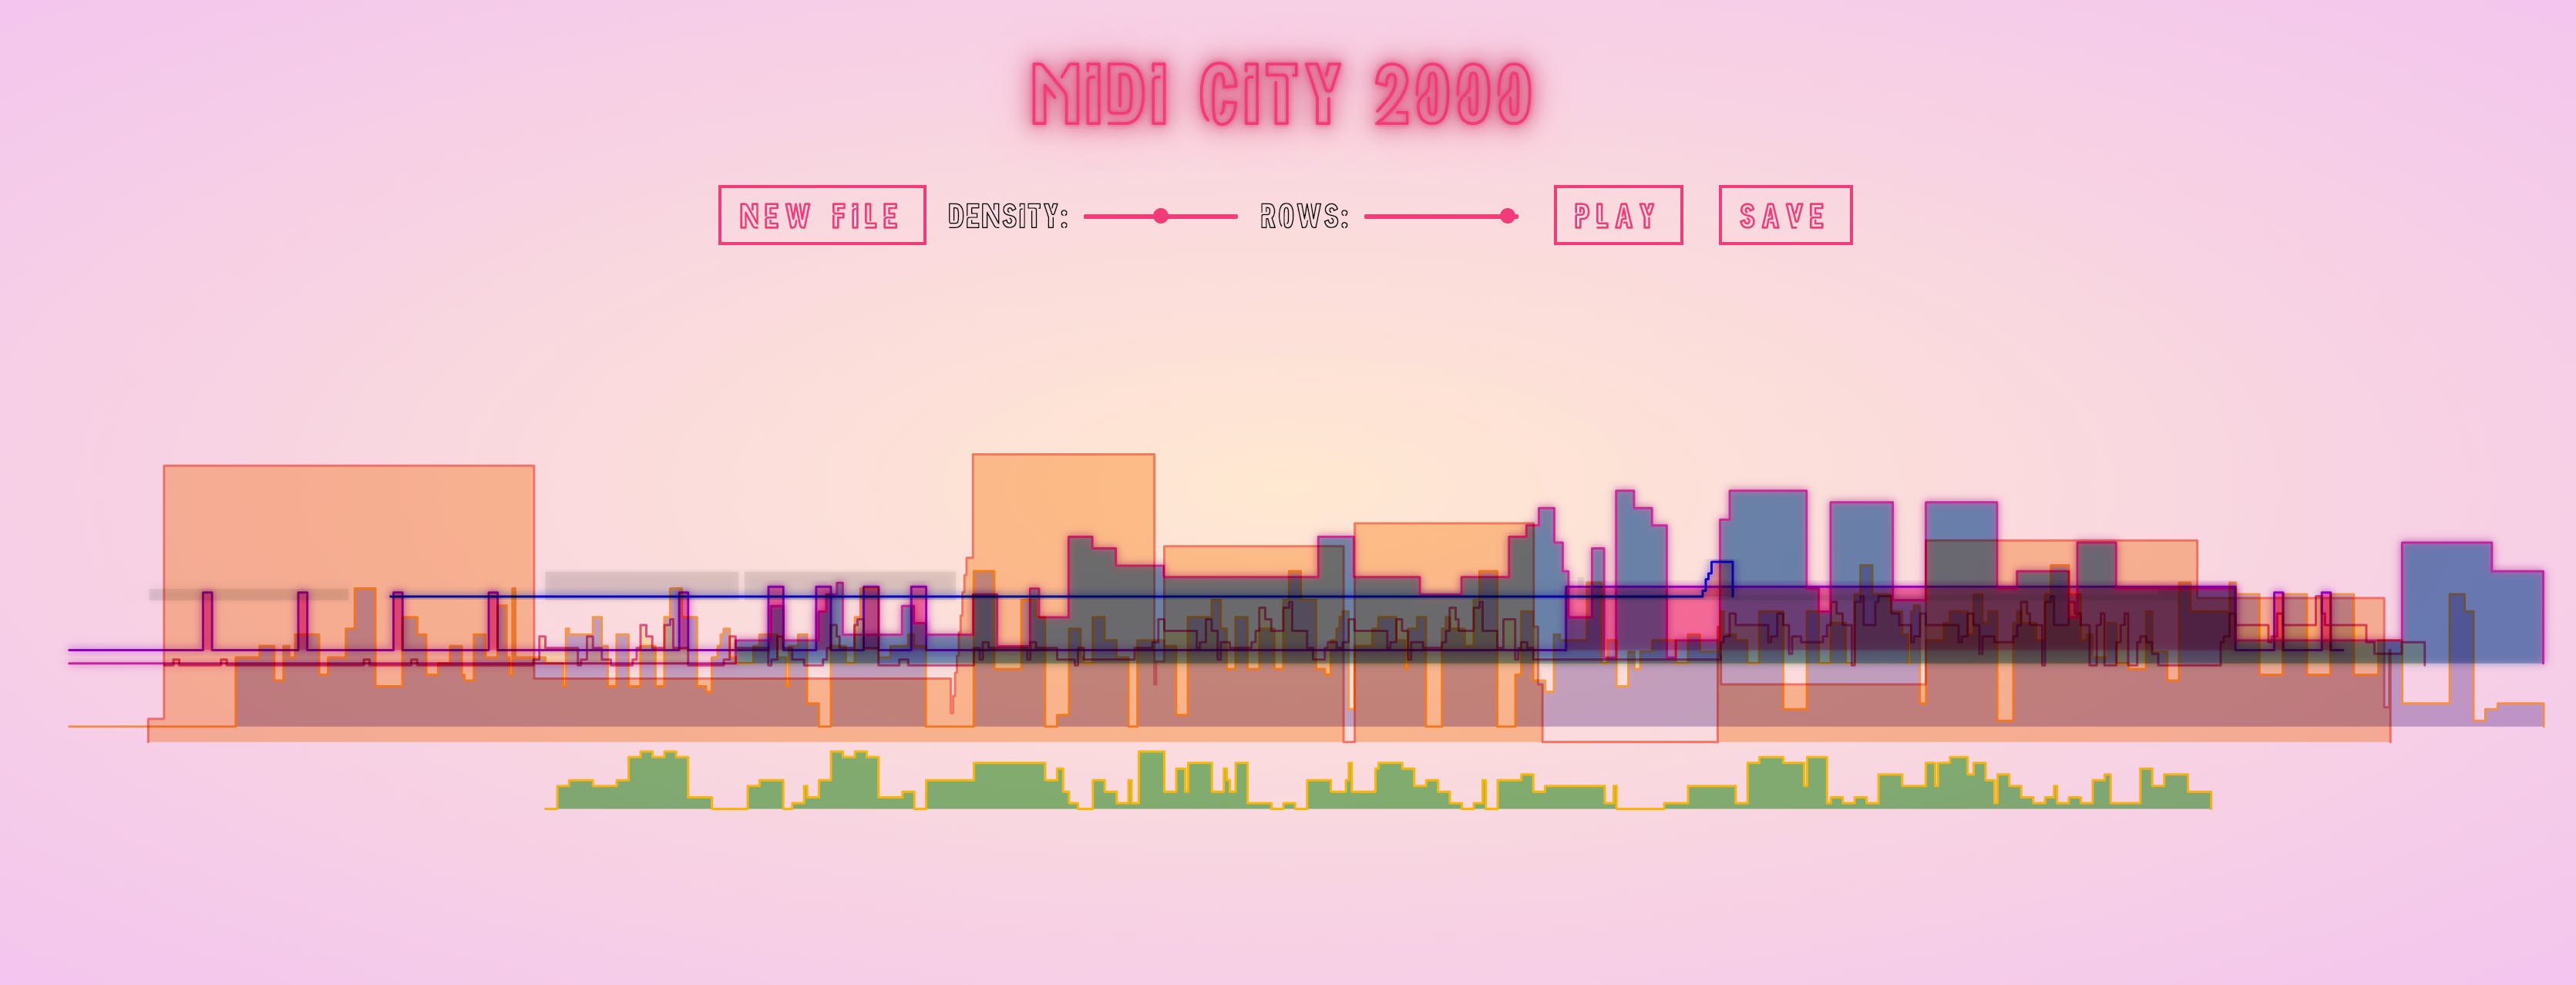 MIDI CITY 2000 media 2